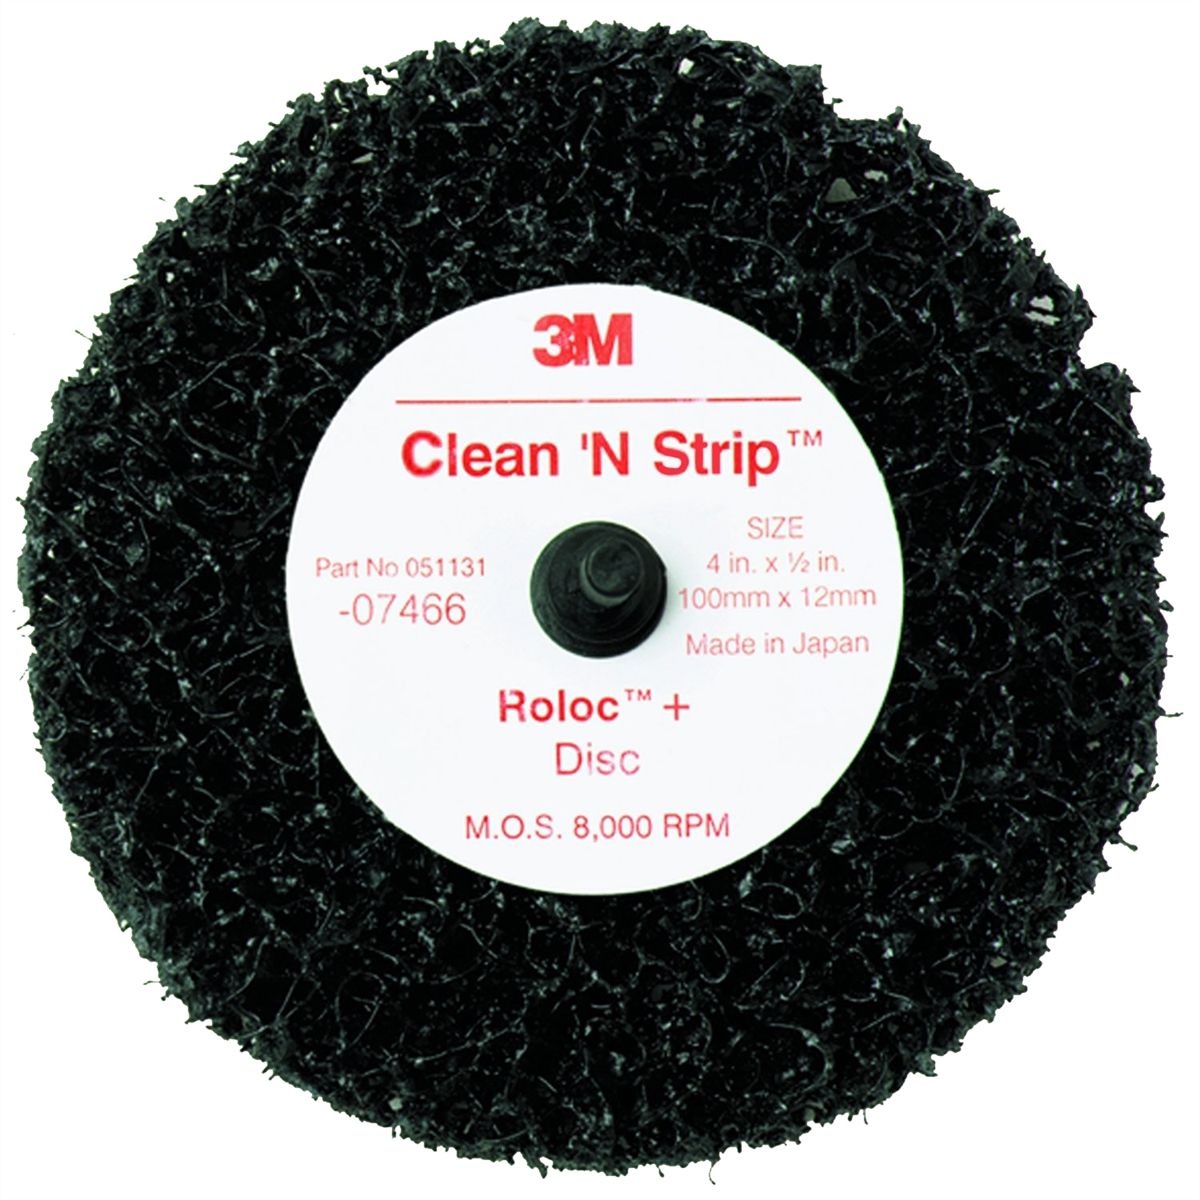 3M 7466 Roloc Clean n Strip Disc - Black 3M7466 MMM7466